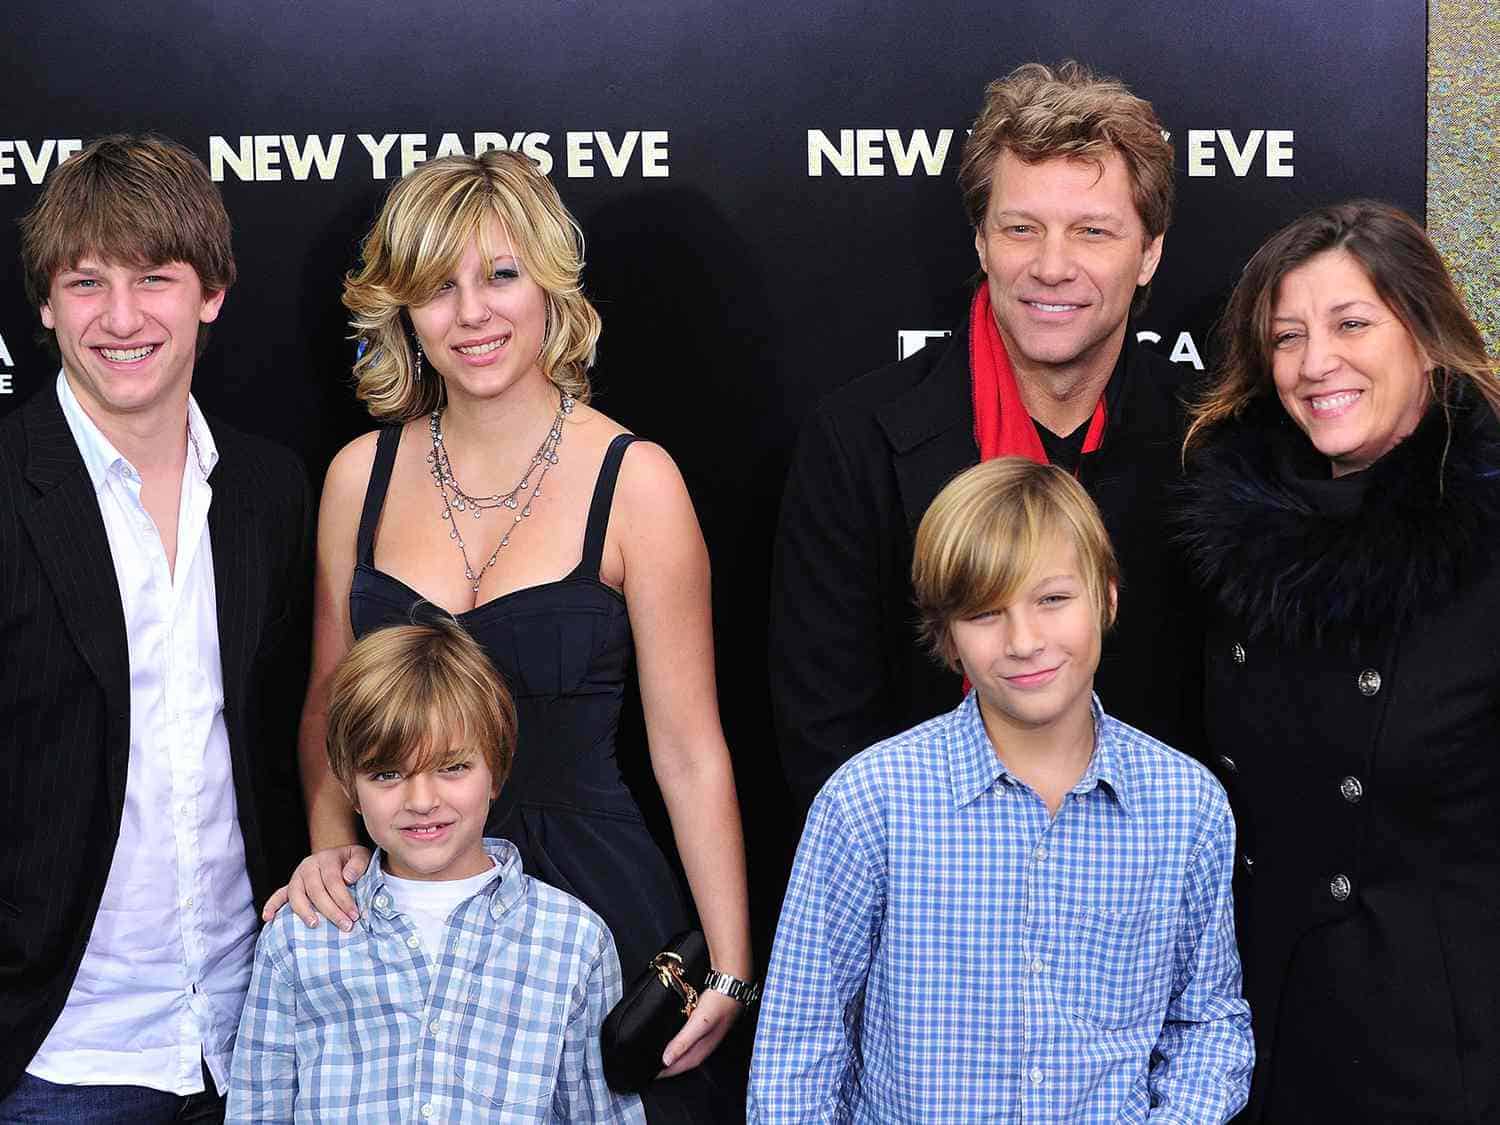 Jon Bon Jovi traiu a esposa?